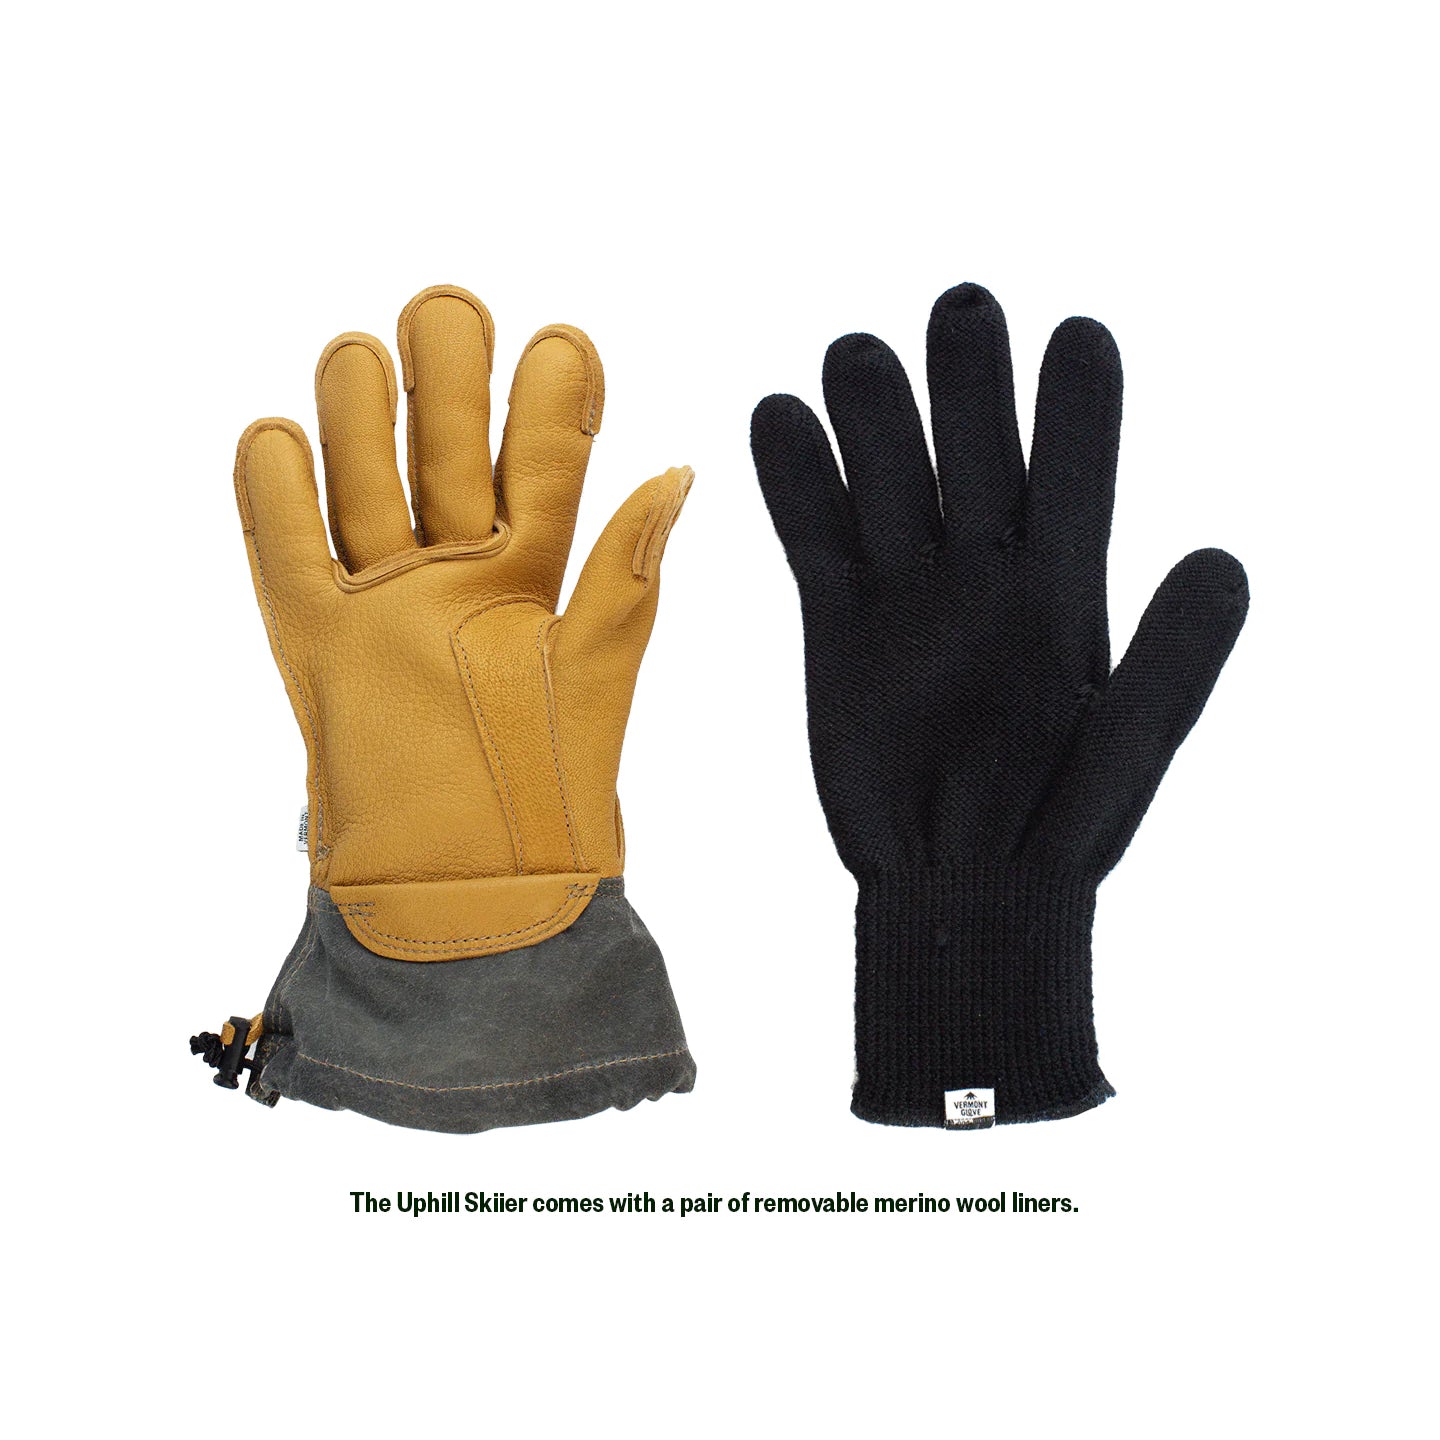 Vermont Glove Uphill Skier Glove palm and wool liner